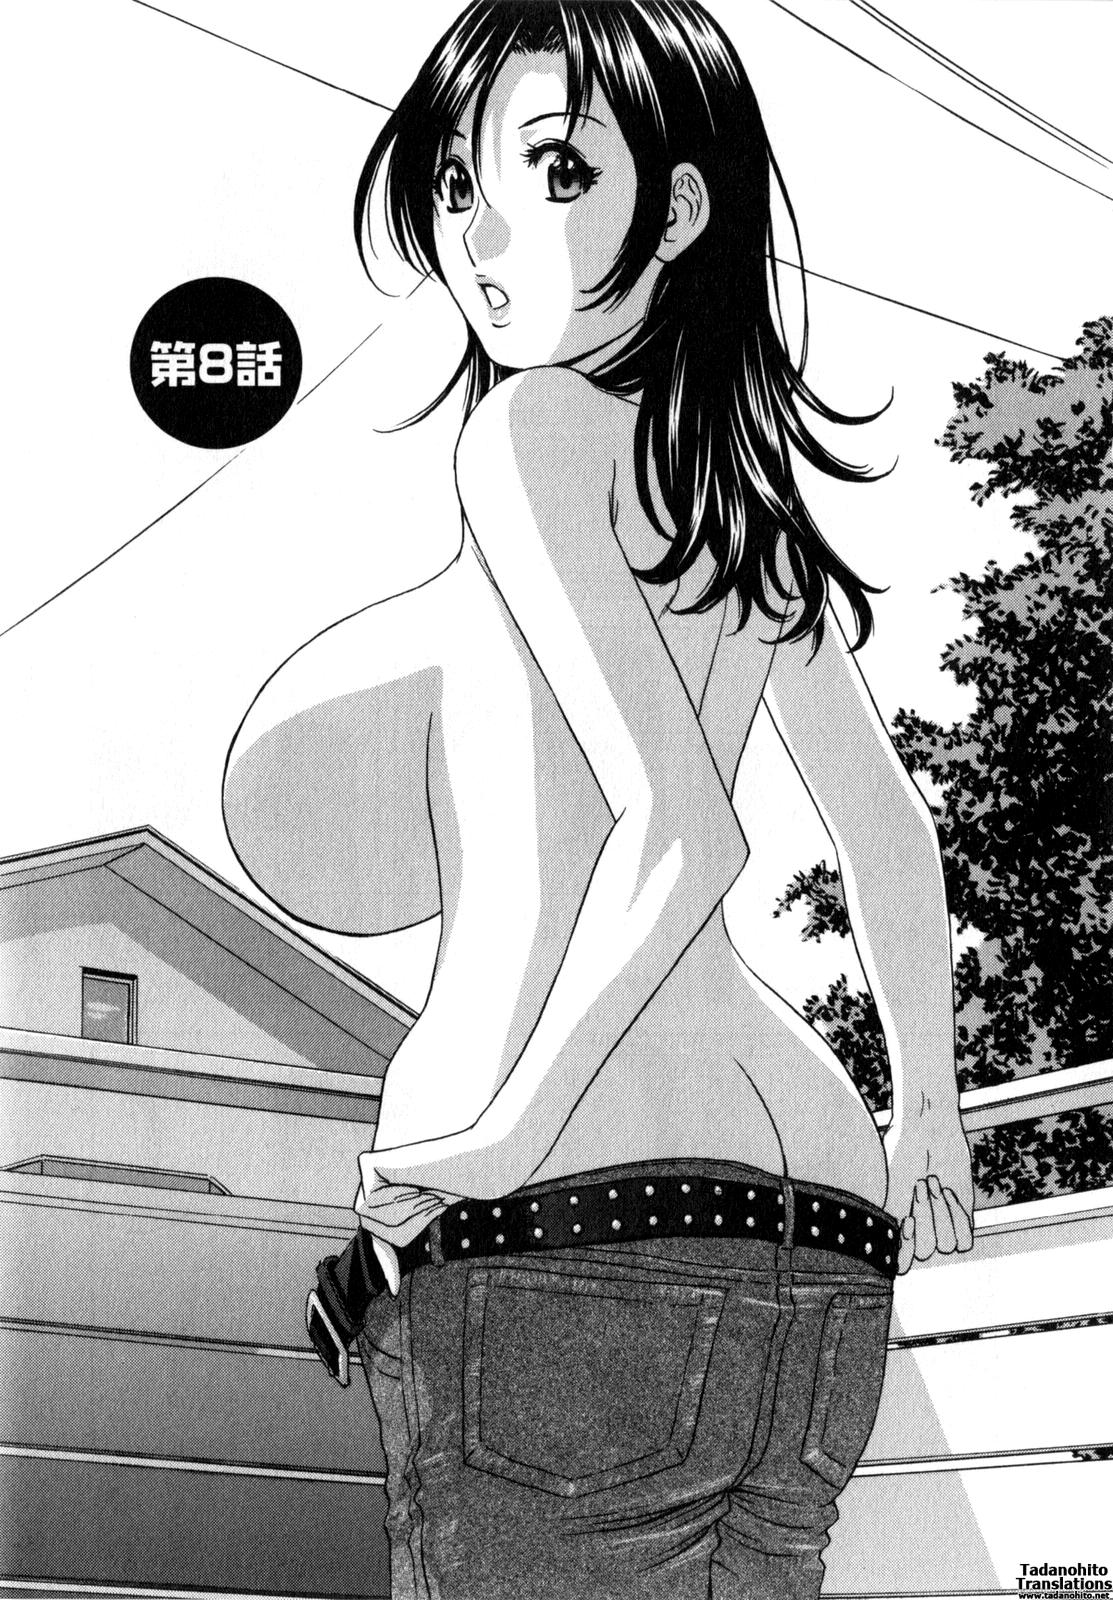 Life with Married Women Just Like a Manga 1 135